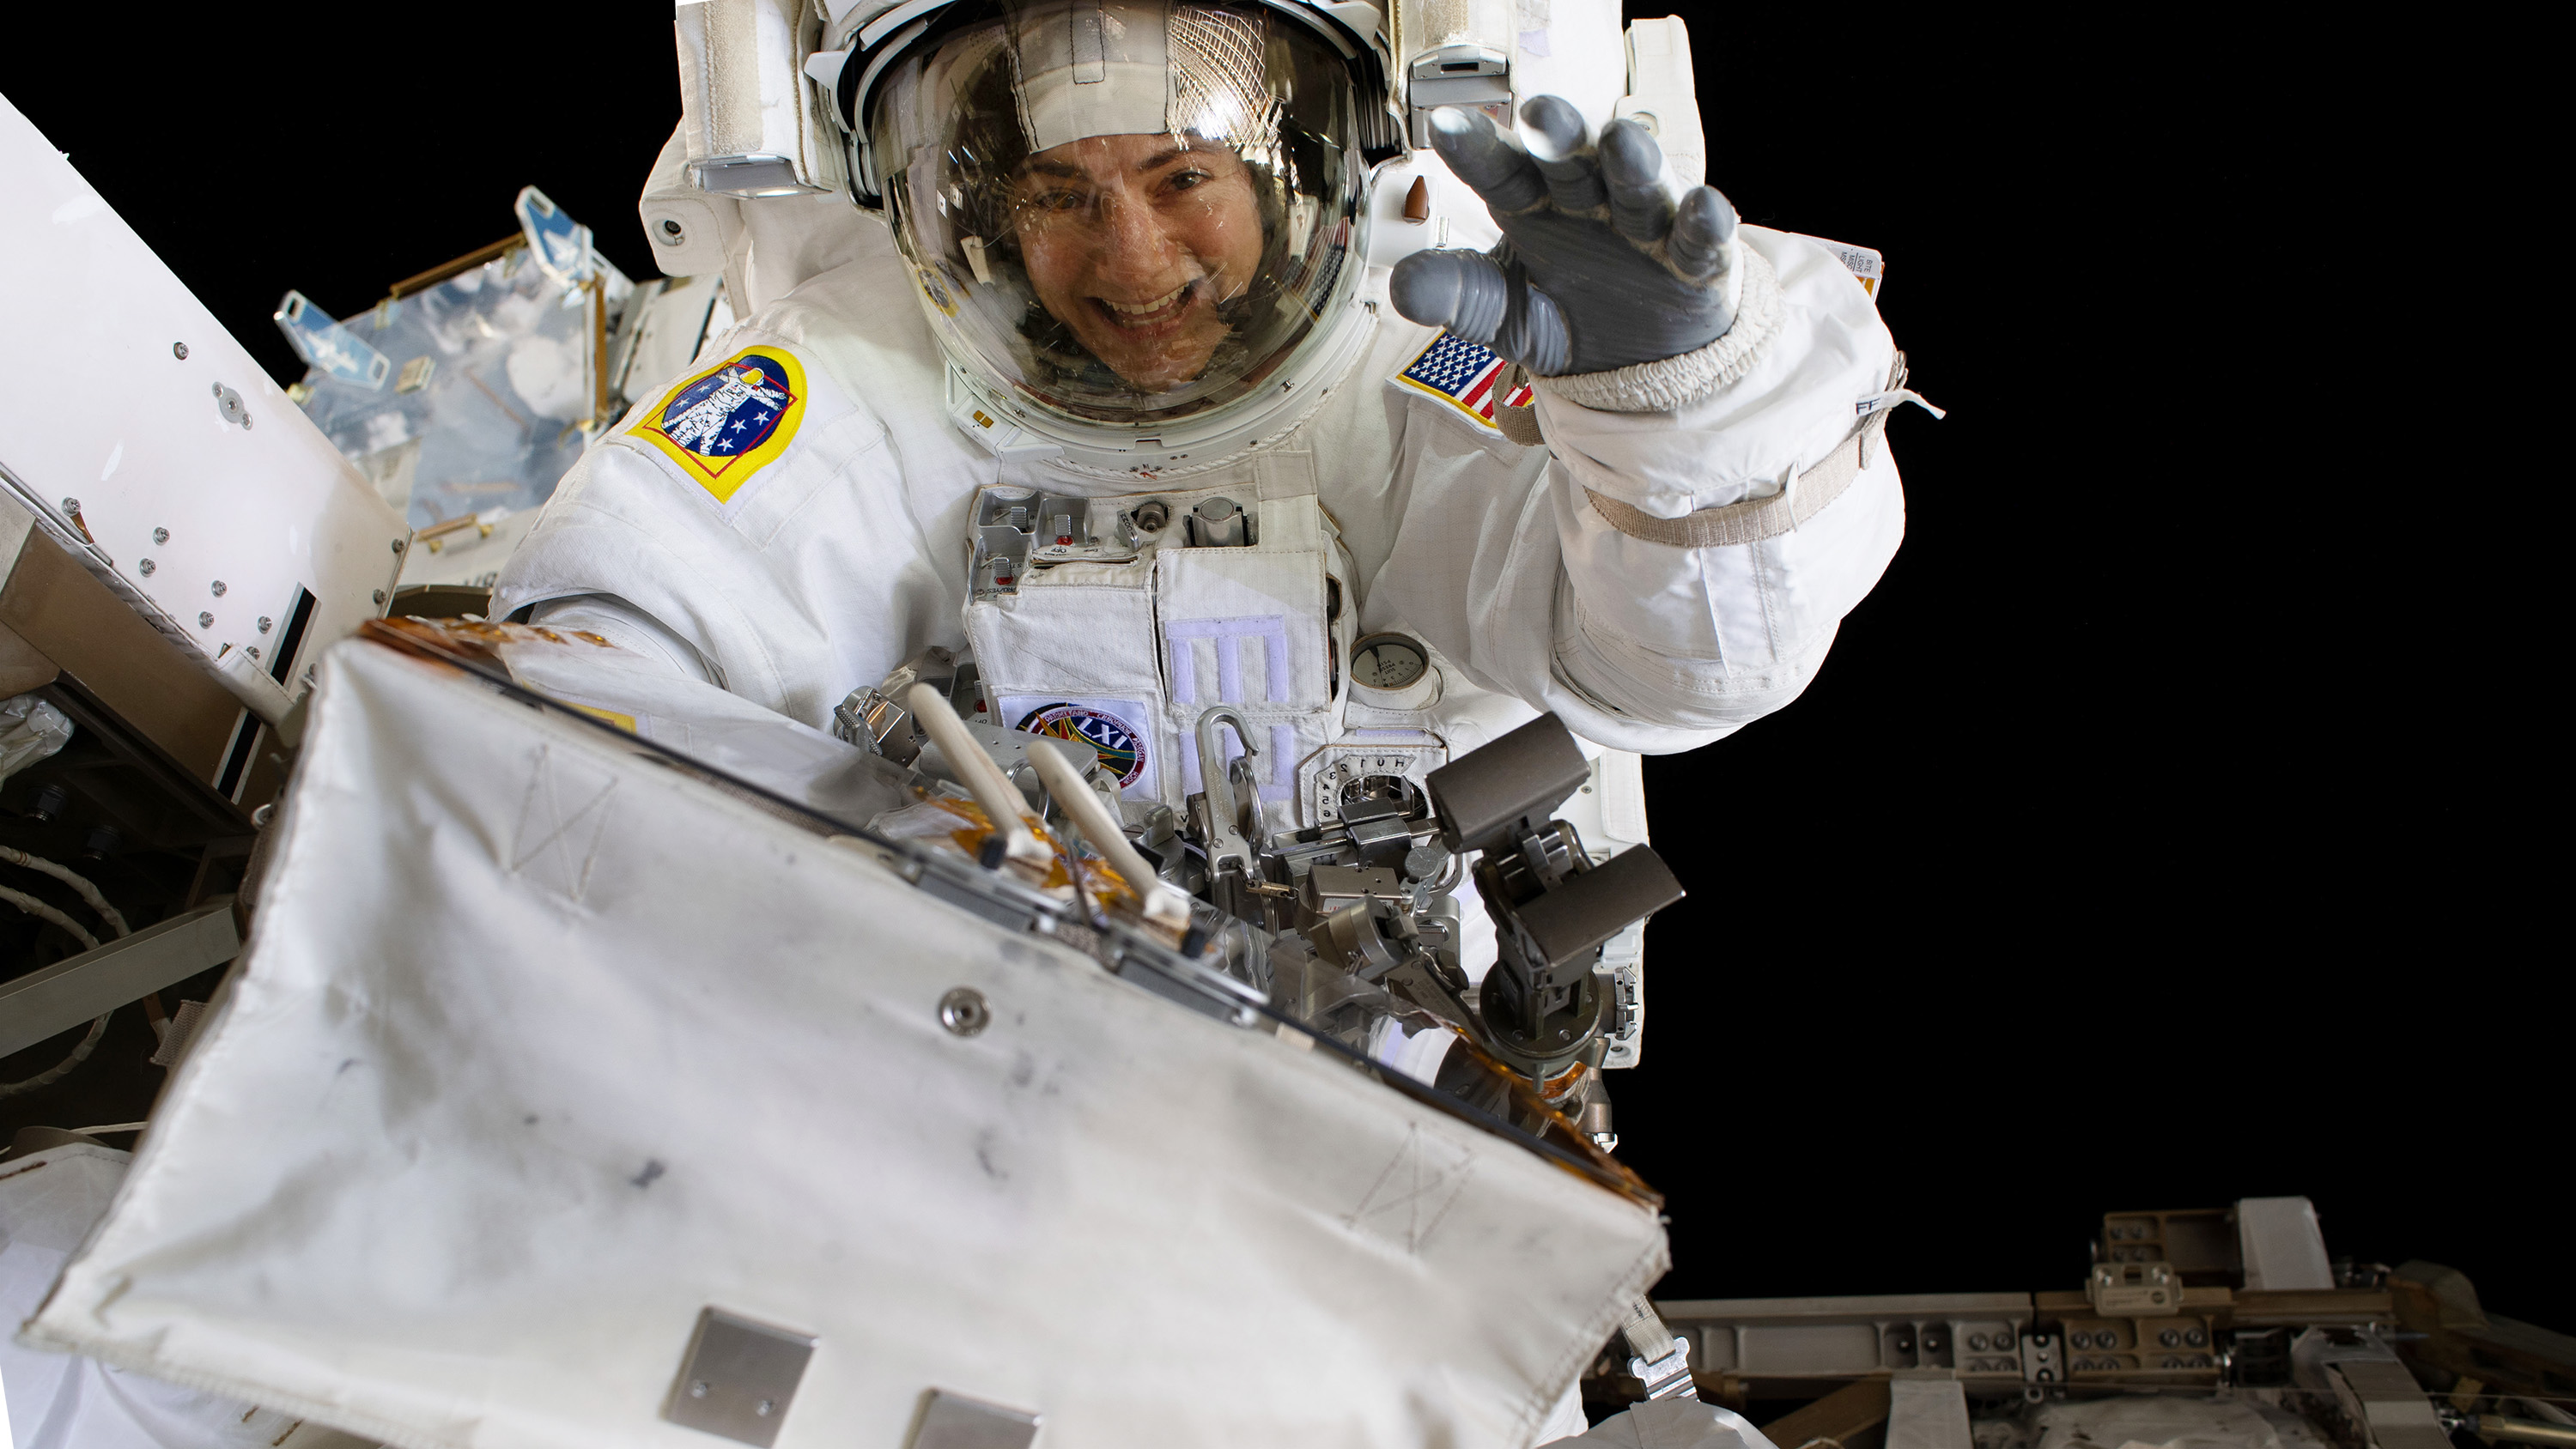 Jessica Meir on a spacewalk